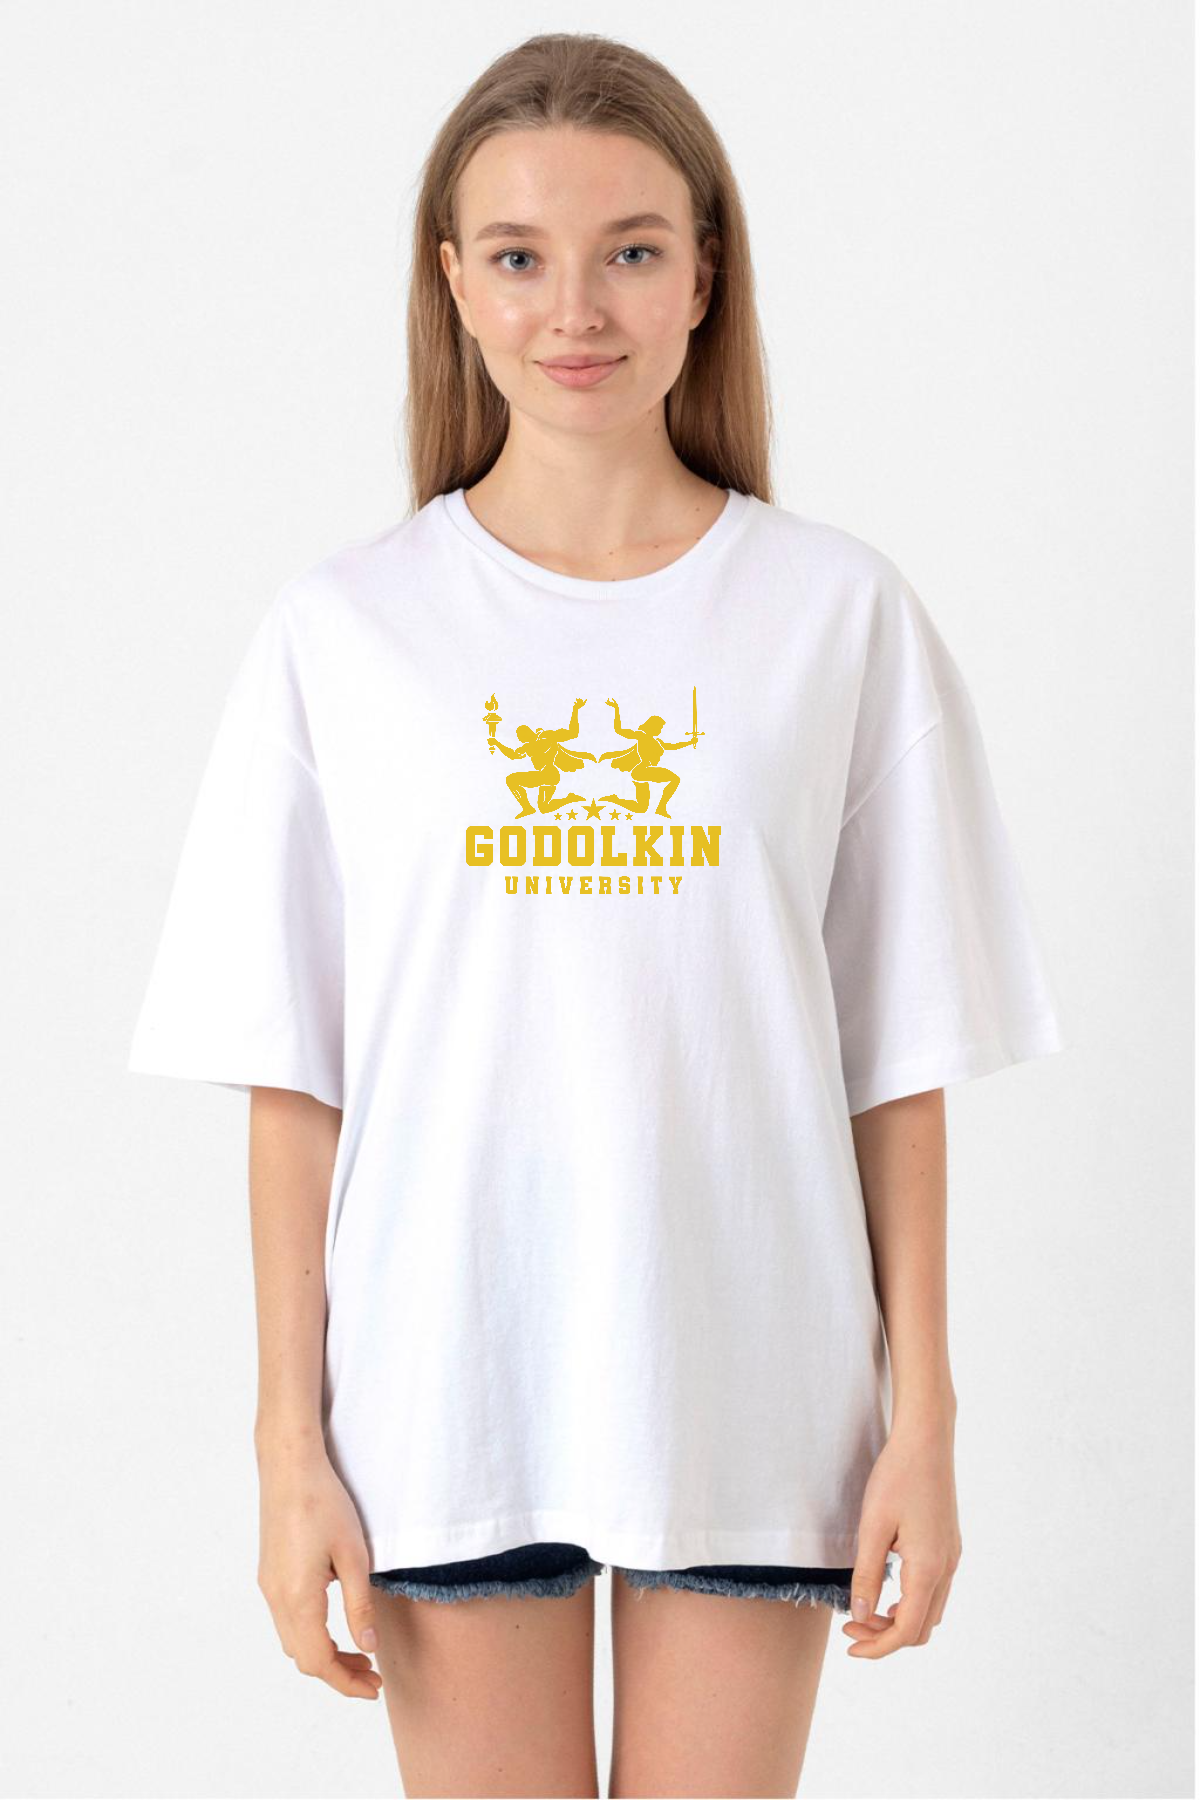 Gen V Godolkin University Logo Beyaz Kadın Oversize Tshirt